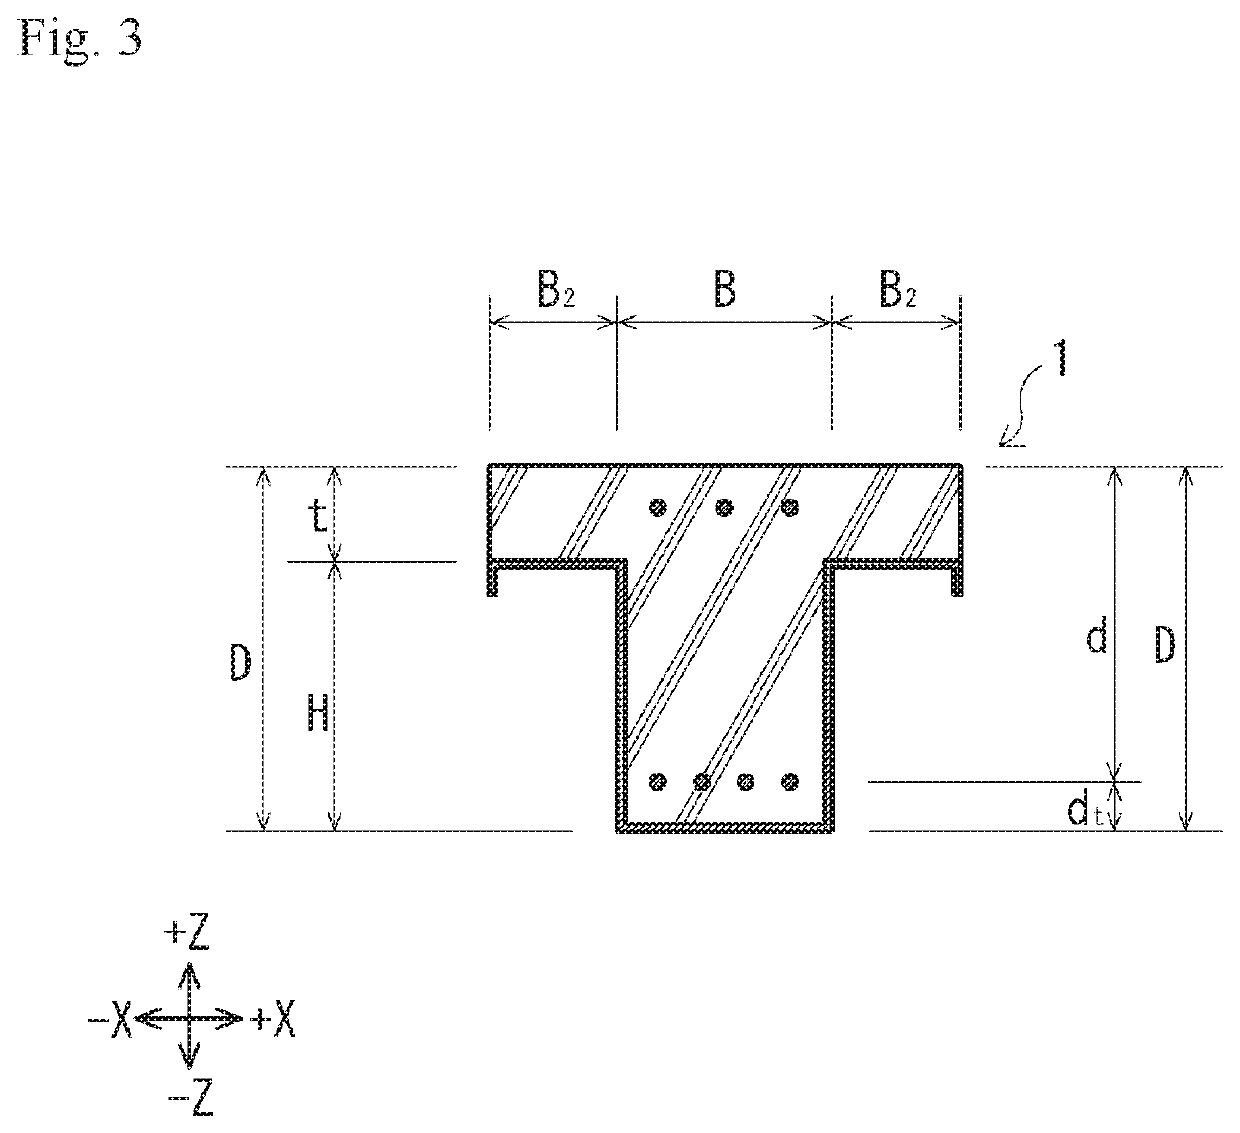 Steel-framed concrete beam and method for constructing steel-framed concrete beam